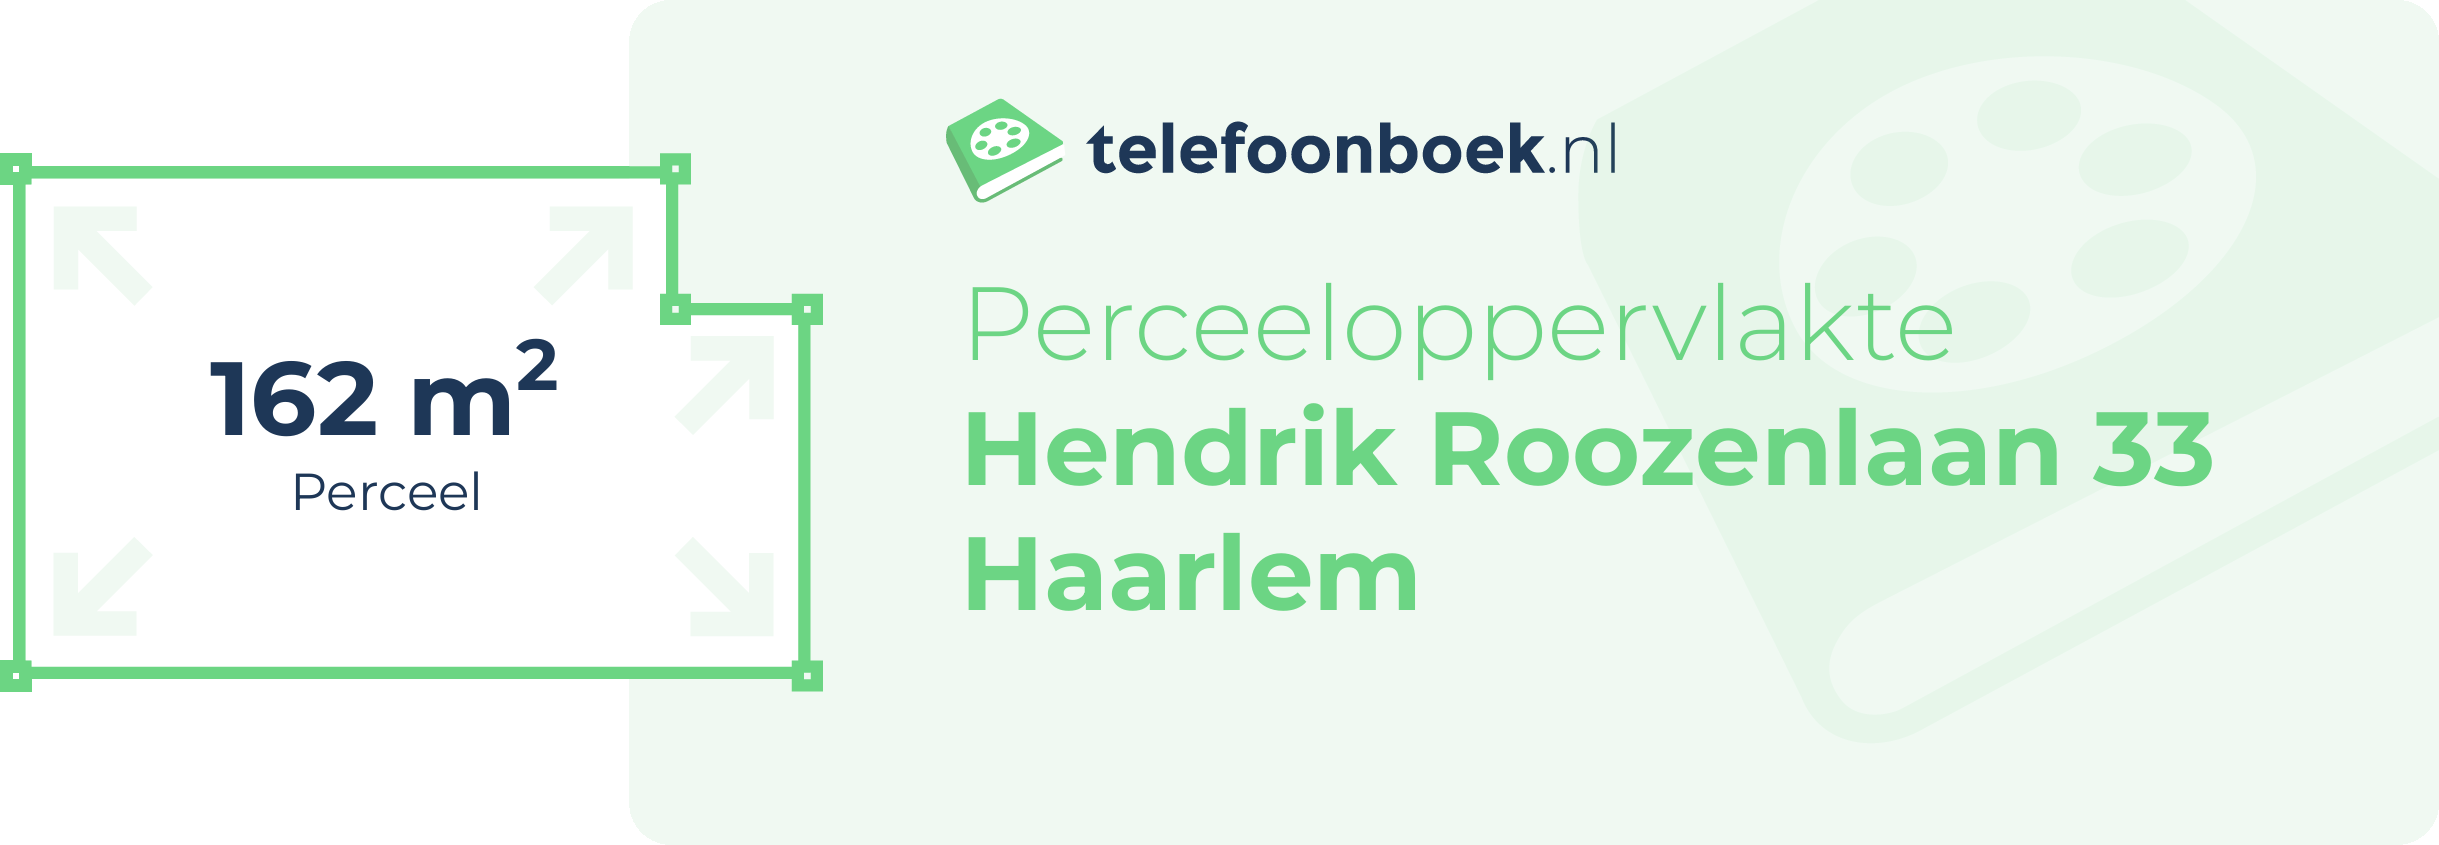 Perceeloppervlakte Hendrik Roozenlaan 33 Haarlem